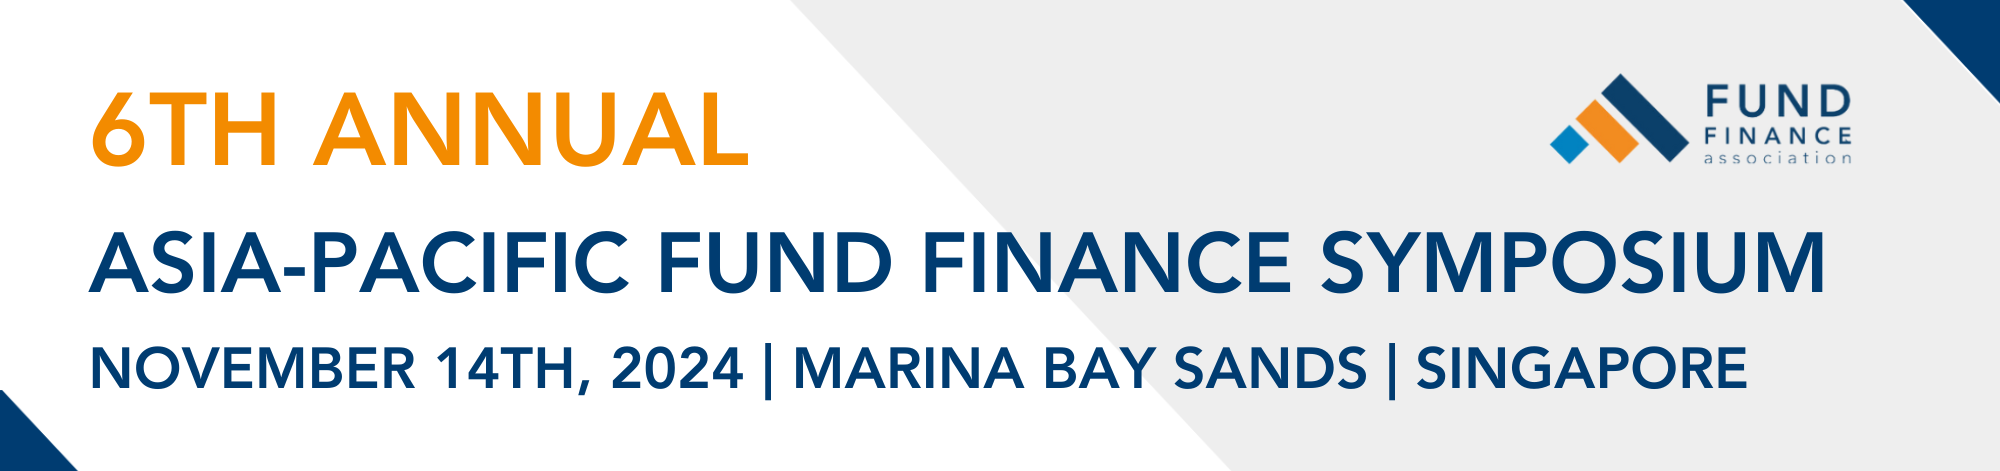 2024 Asia-Pacific Fund Finance Symposium